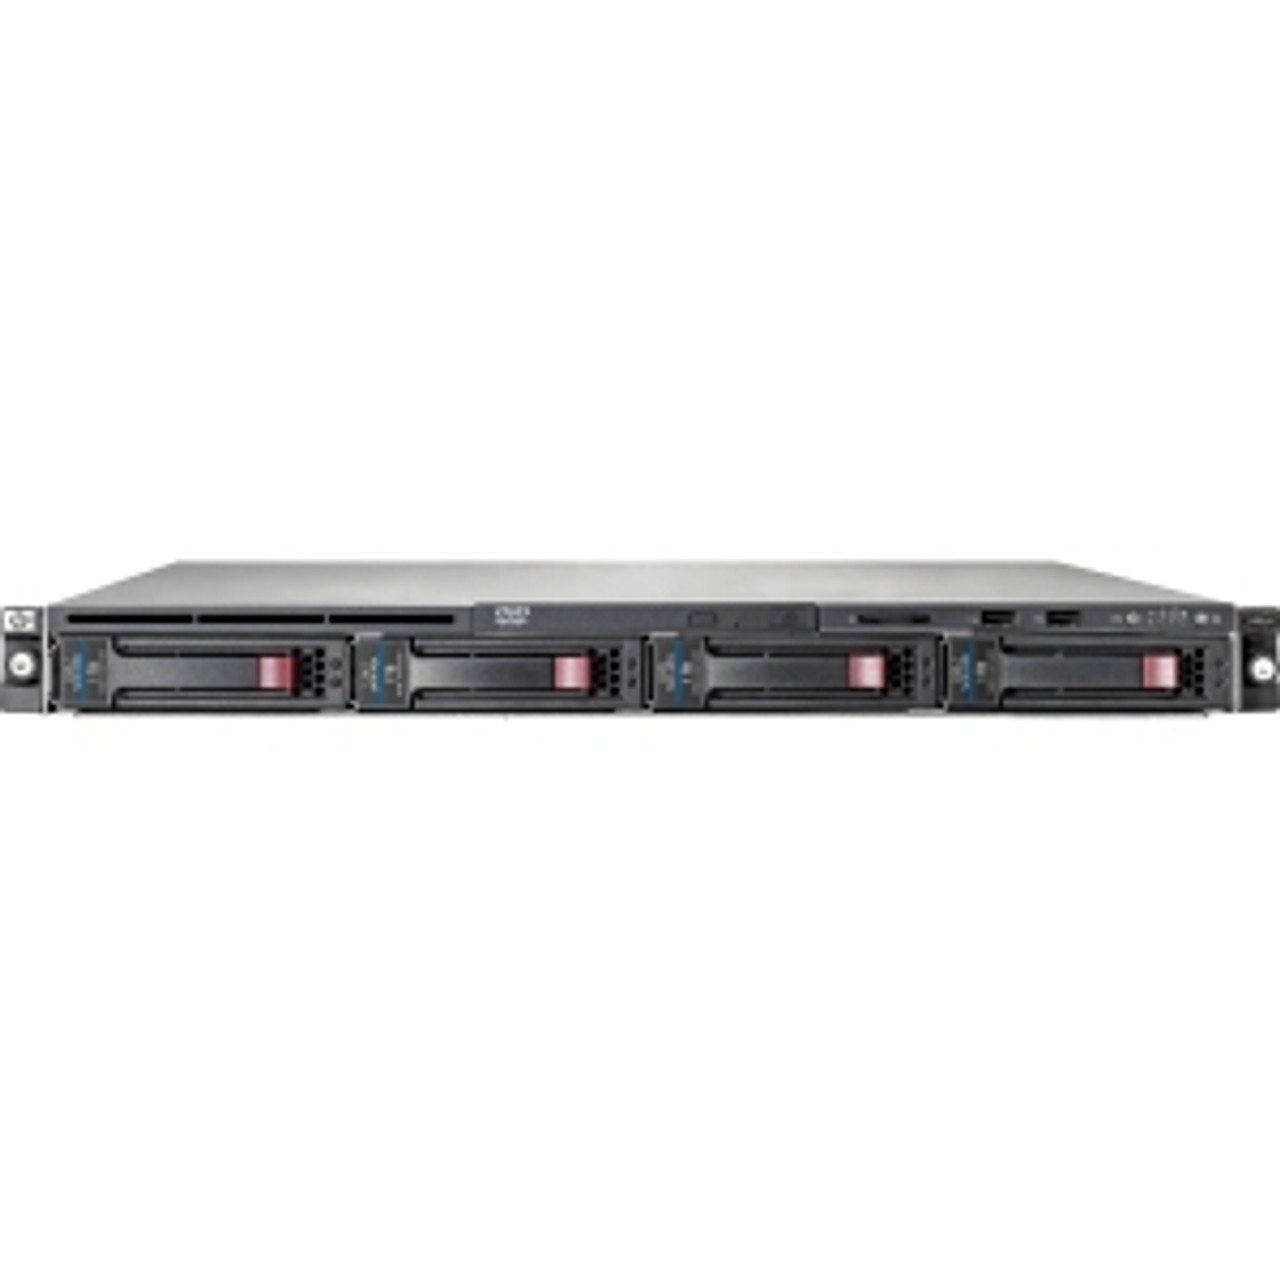 BV854A - HP StorageWorks X1400 G2 Network Storage Server 1 x Intel Xeon E5503 2 GHz 4 x Total Bays 4 TB HDD (4 x 1 TB) 4 GB RAM RAID Supported 6 x USB Ports